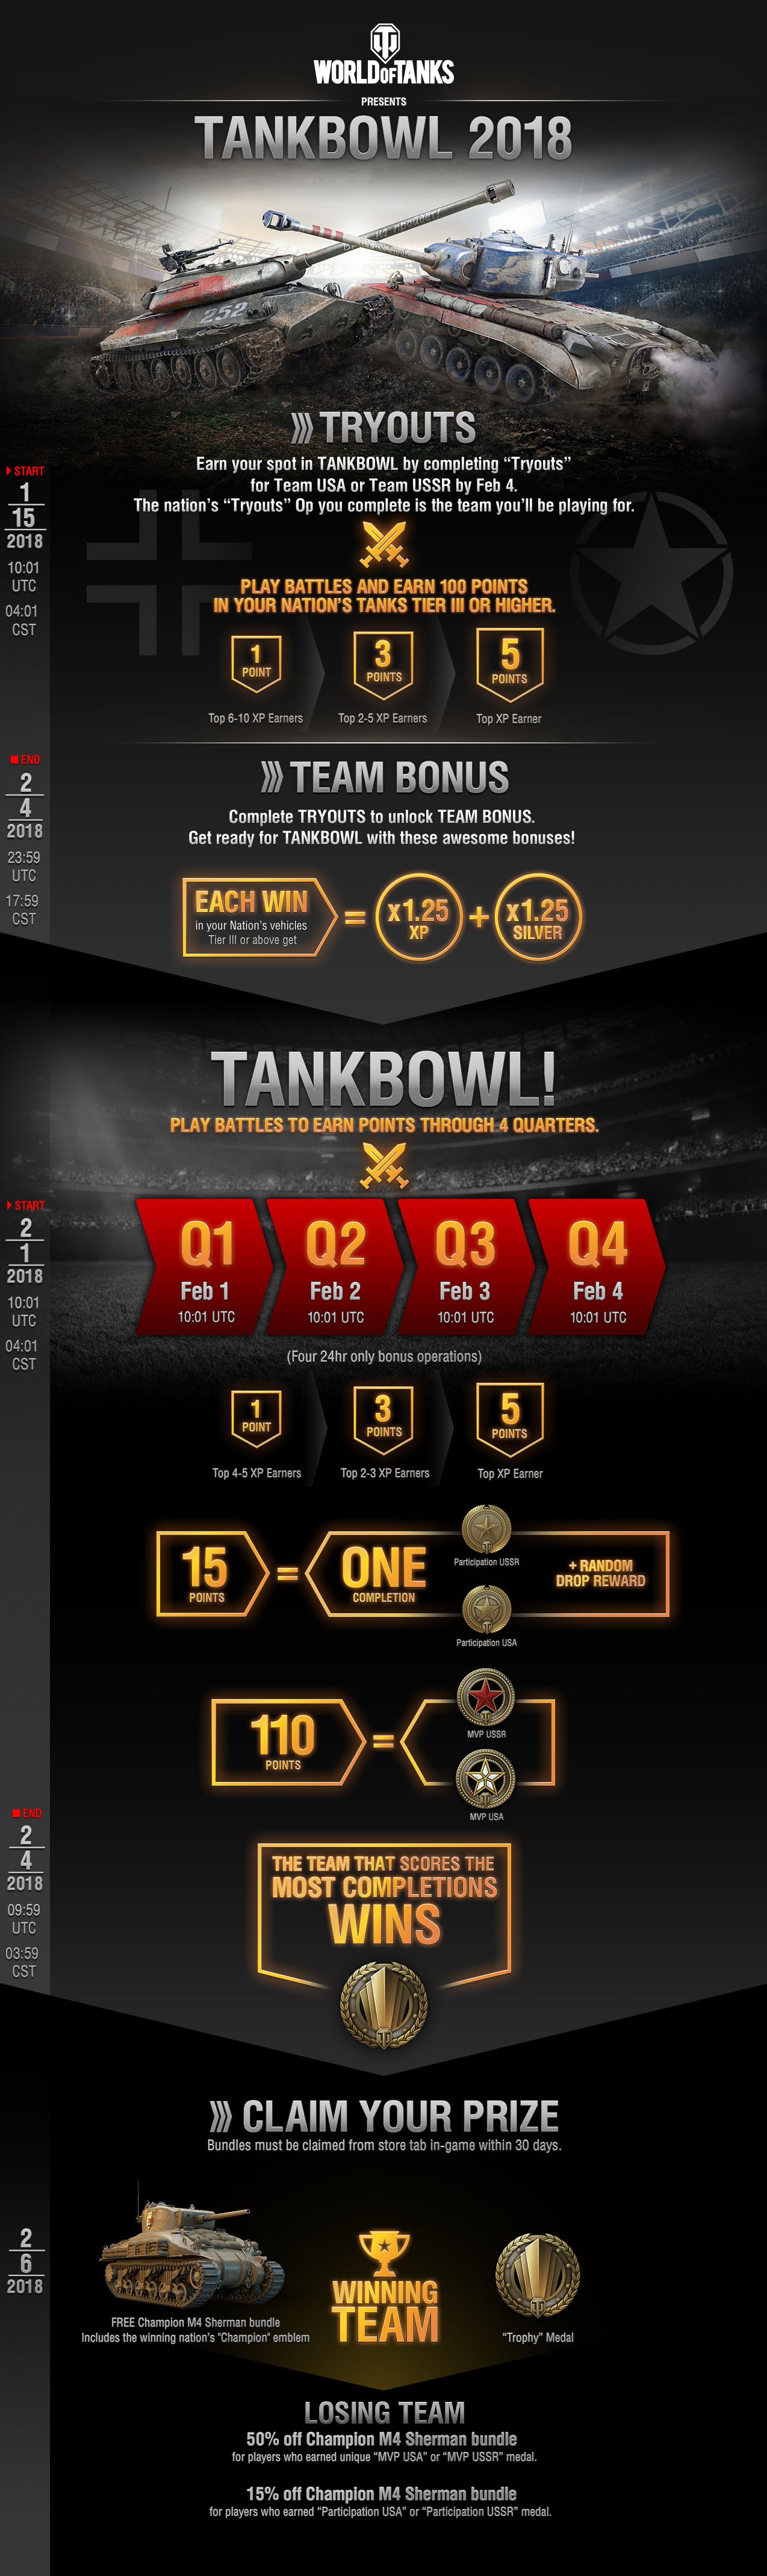 TankBowl_infographic_2018_EN